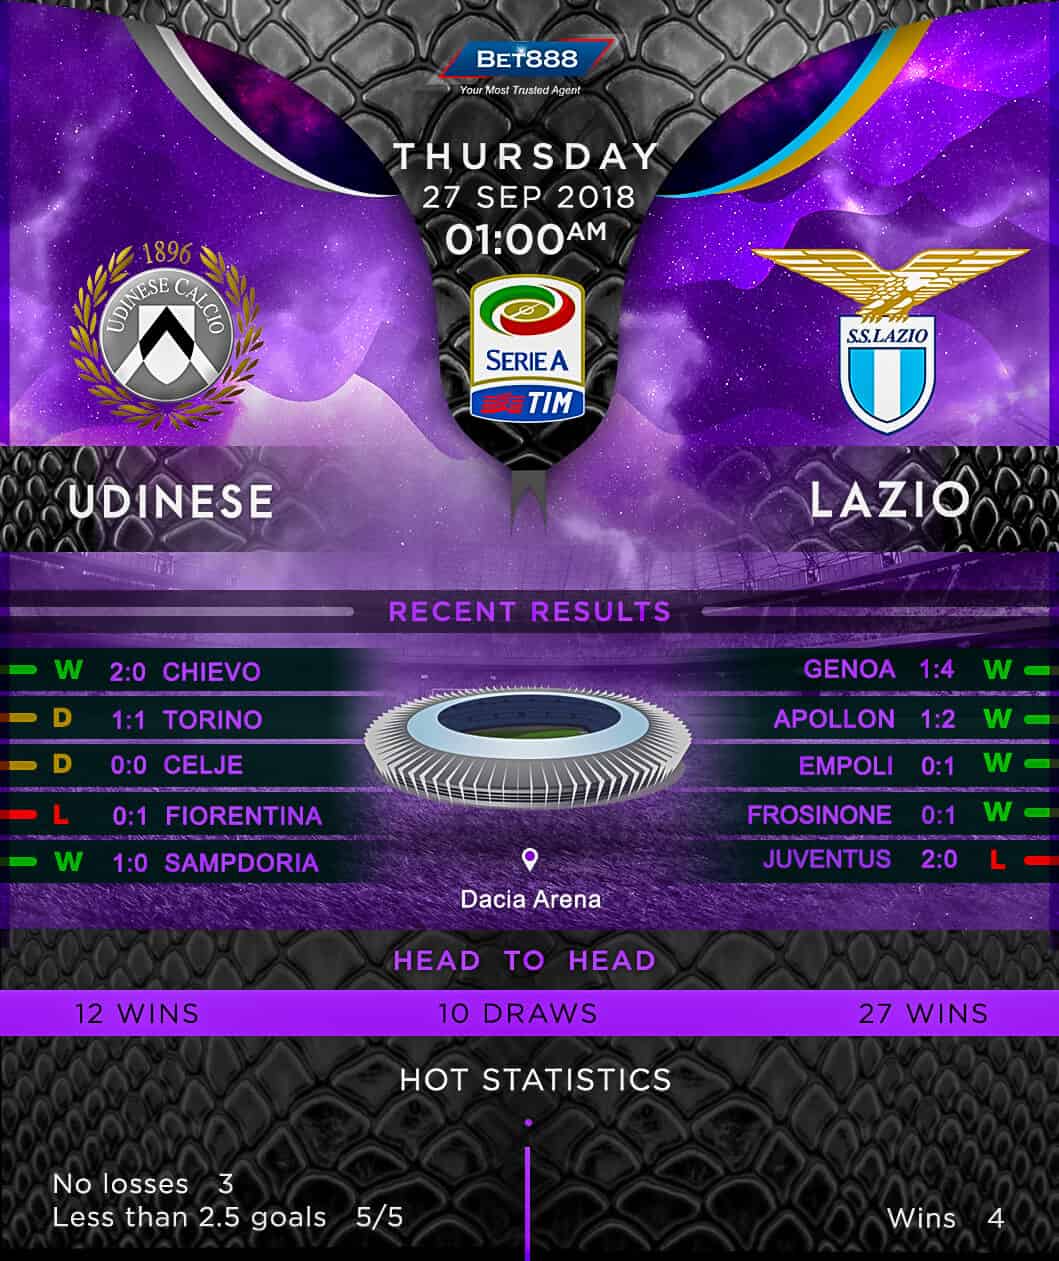 Udinese vs Lazio 27/09/18